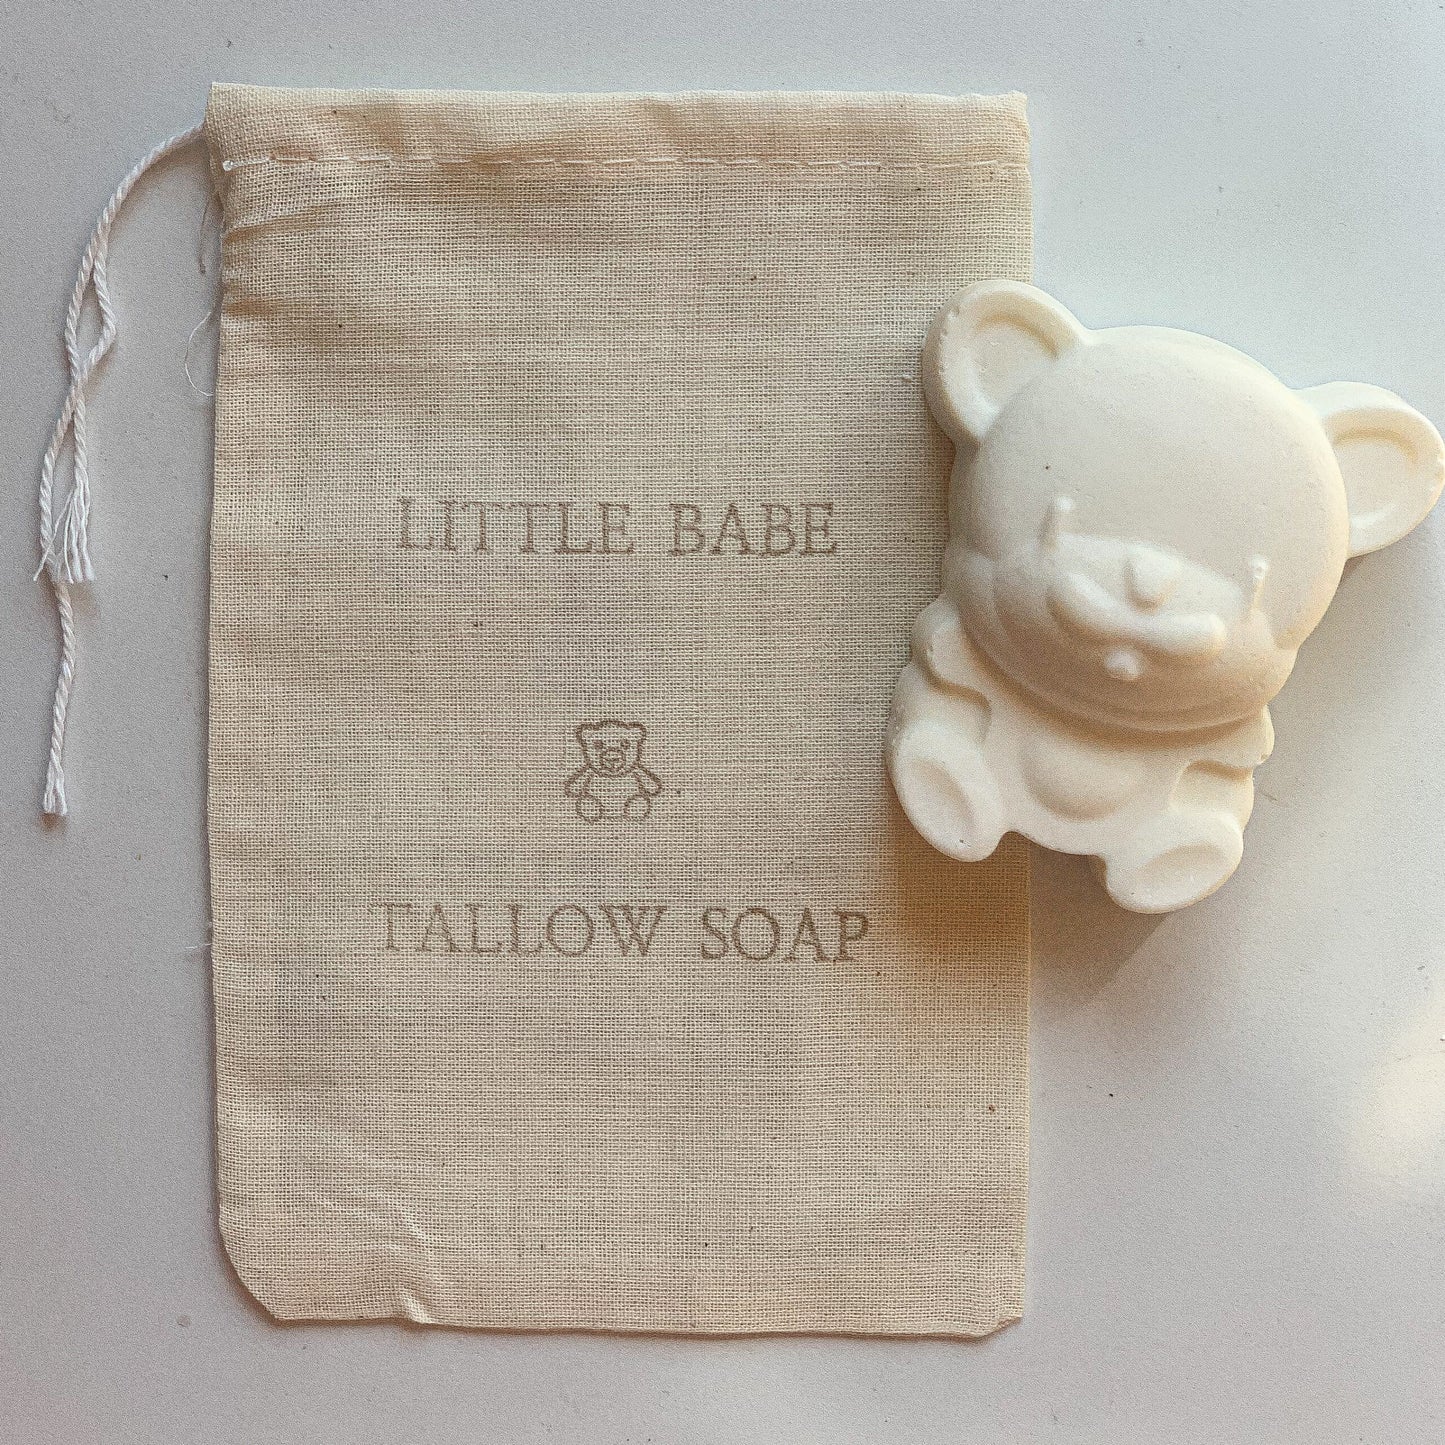 Little Babe Tallow Bar Soap – Teddy Bear